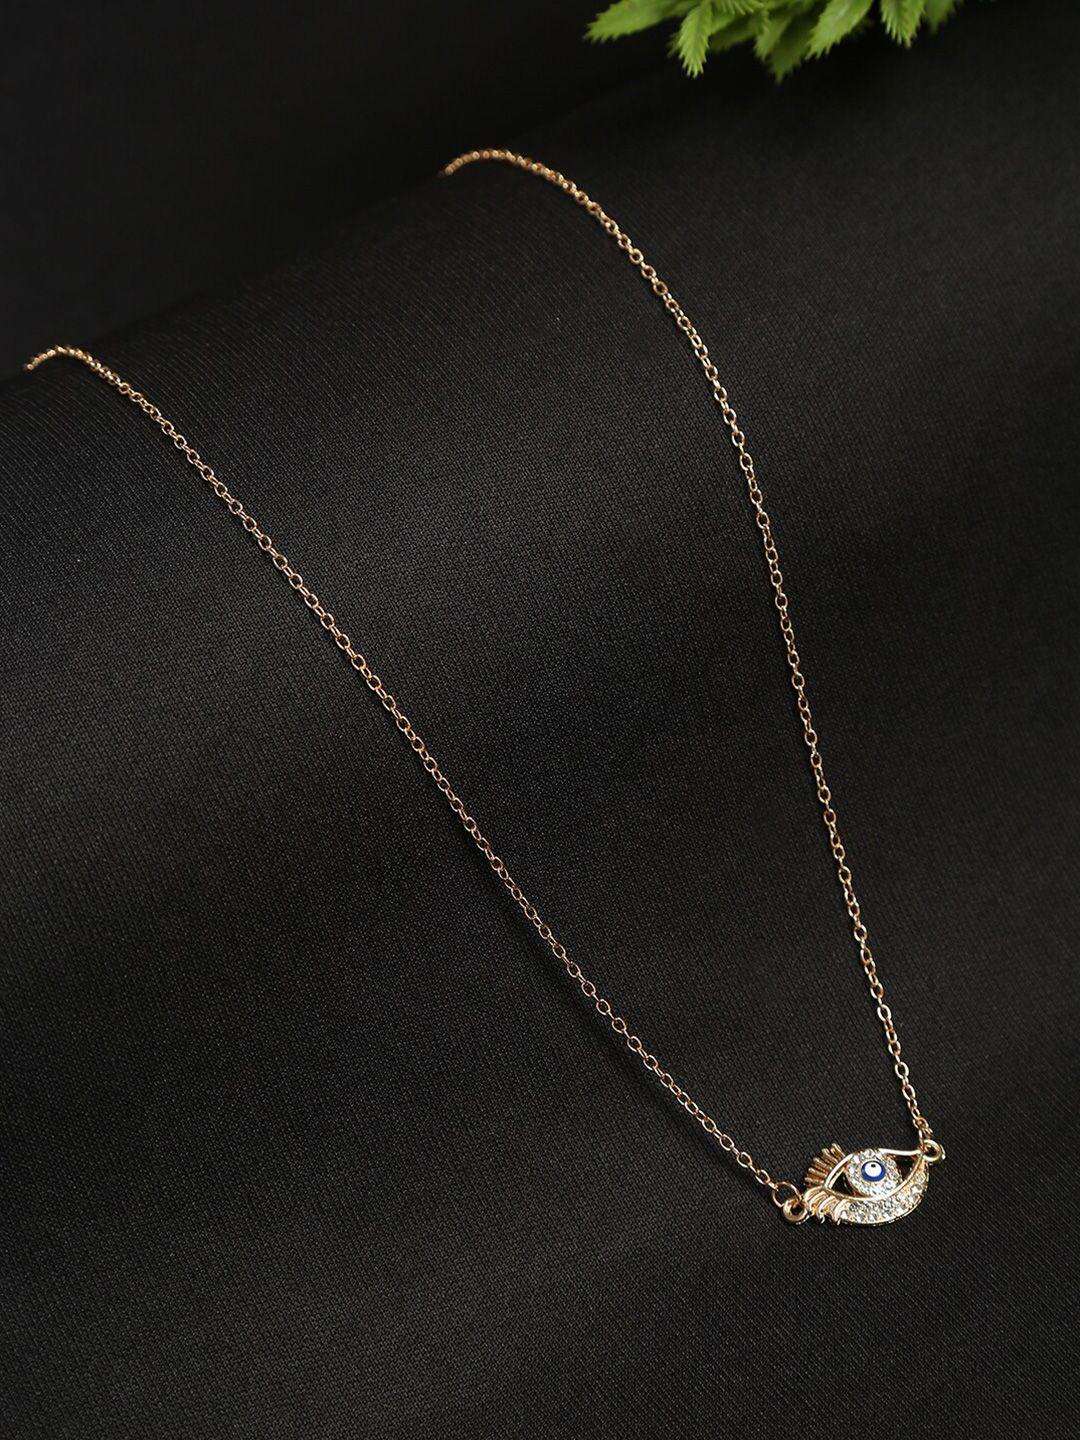 celena cole gold-toned & white evil eye pendant necklace